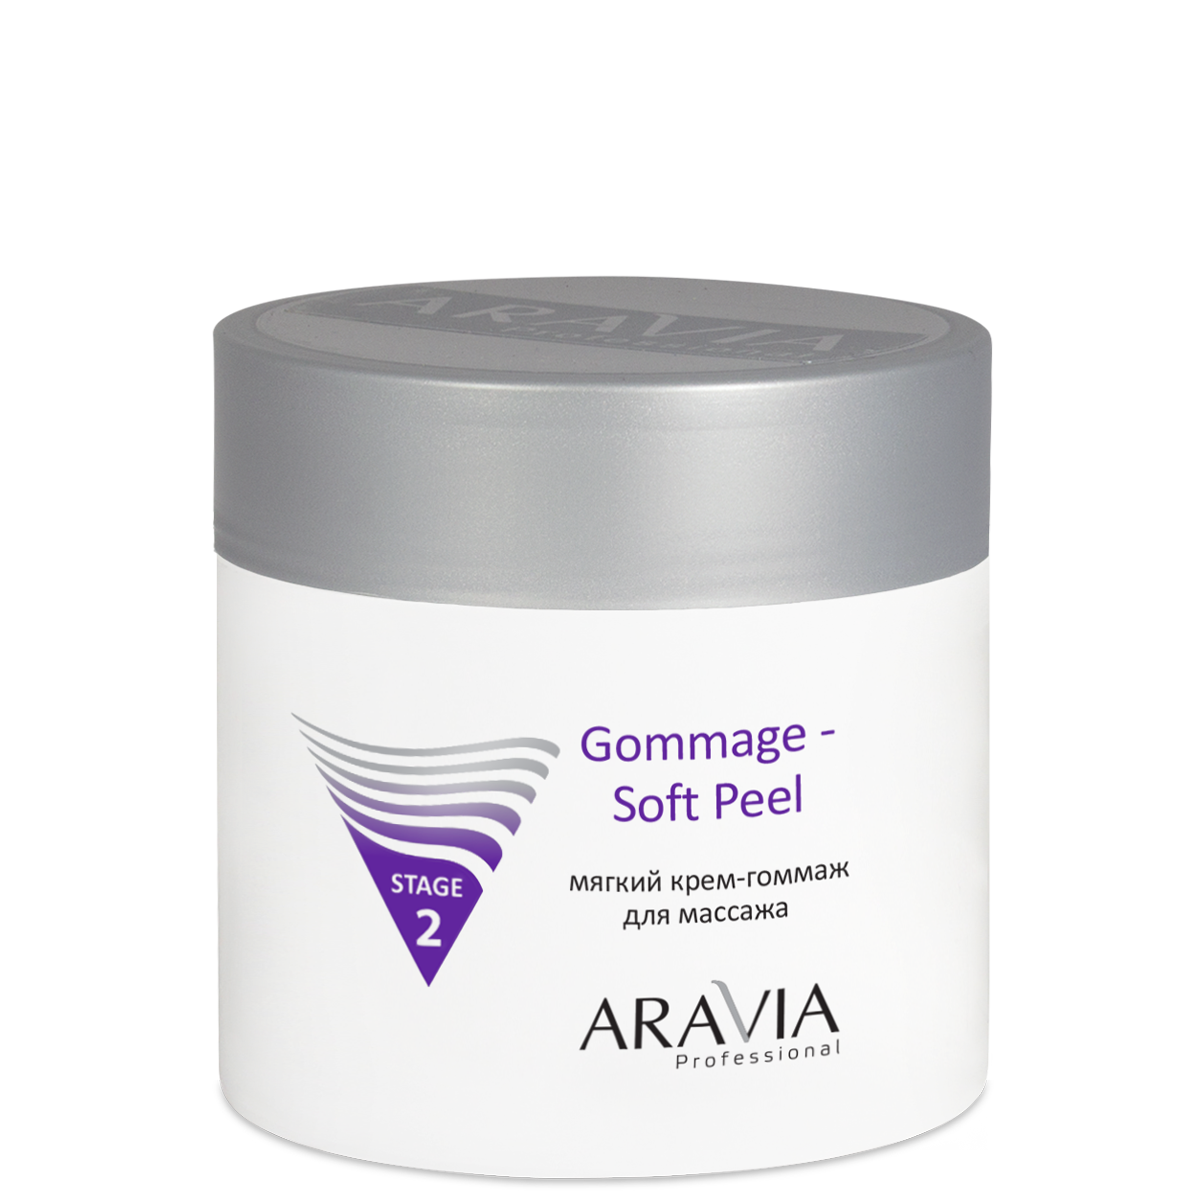 ARAVIA Крем-гоммаж мягкий для массажа / Gommage - Soft Peel 